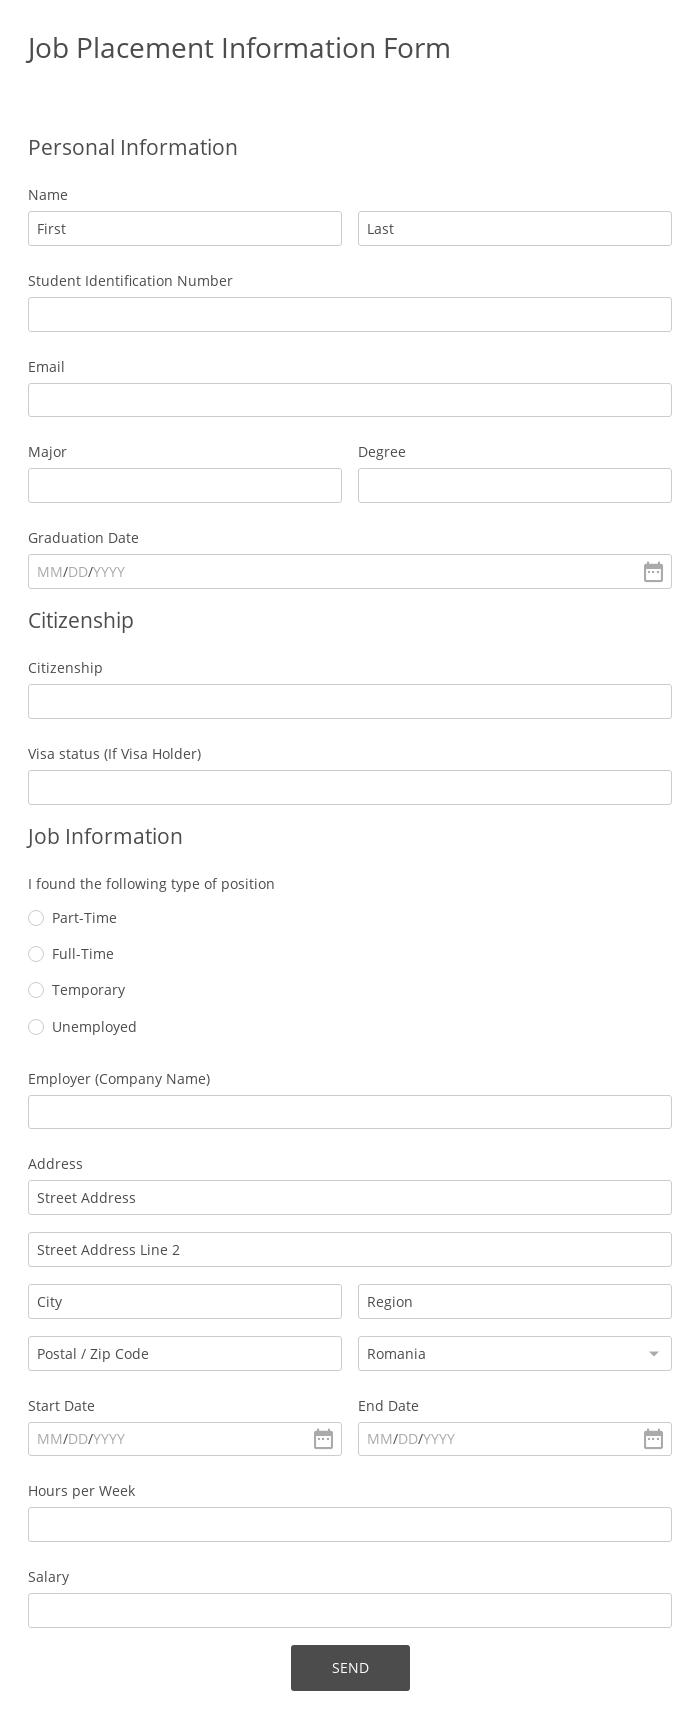 Job Placement Information Form